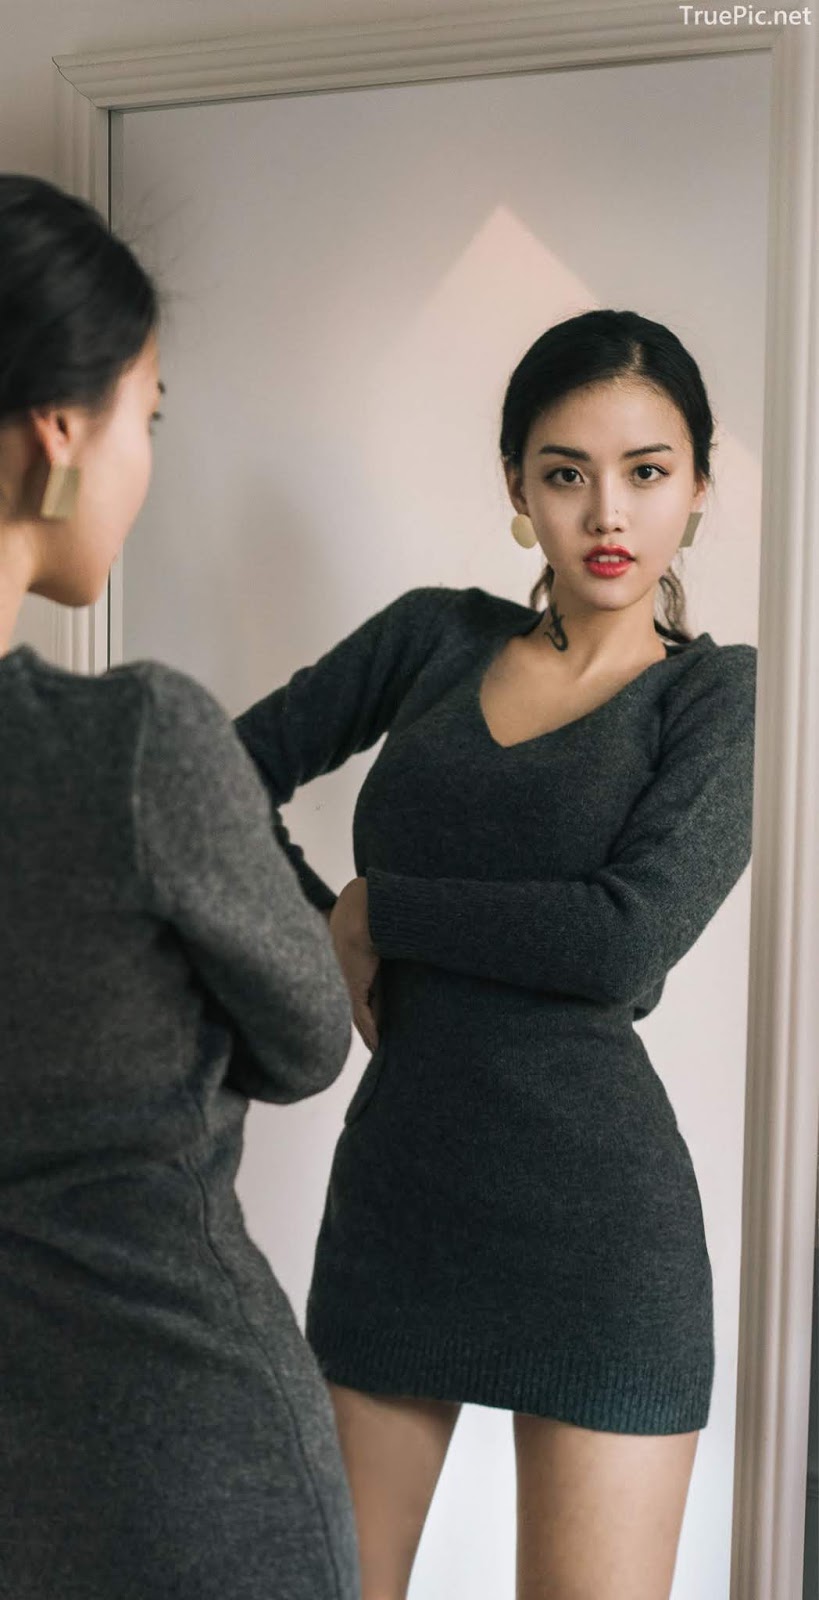 Korean Fashion Model - Baek Ye Jin - Sexy Lingerie Collection - TruePic.net - Picture 99